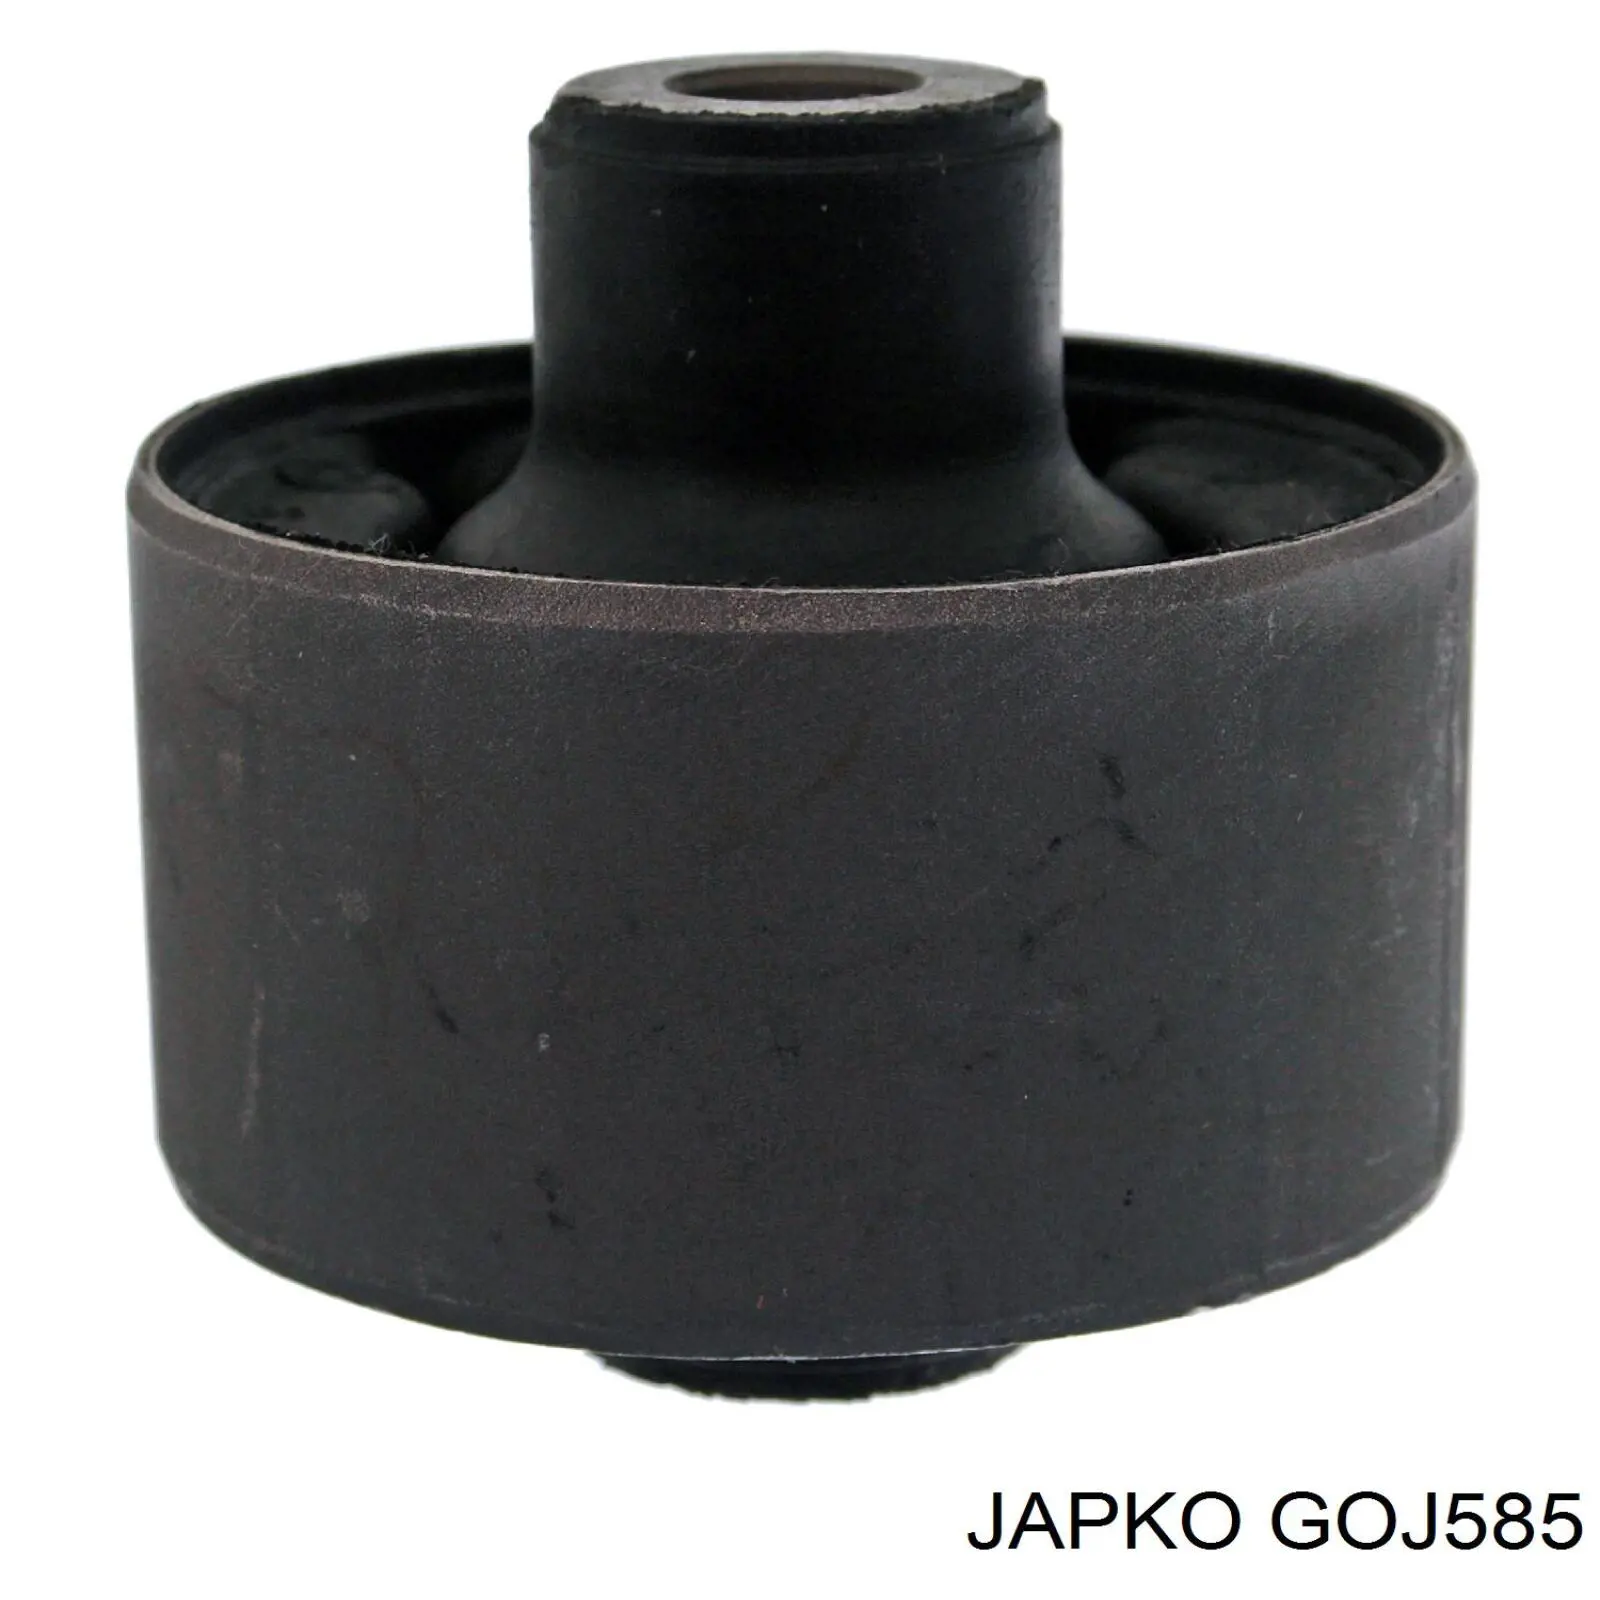 GOJ585 Japko bloque silencioso trasero brazo trasero delantero